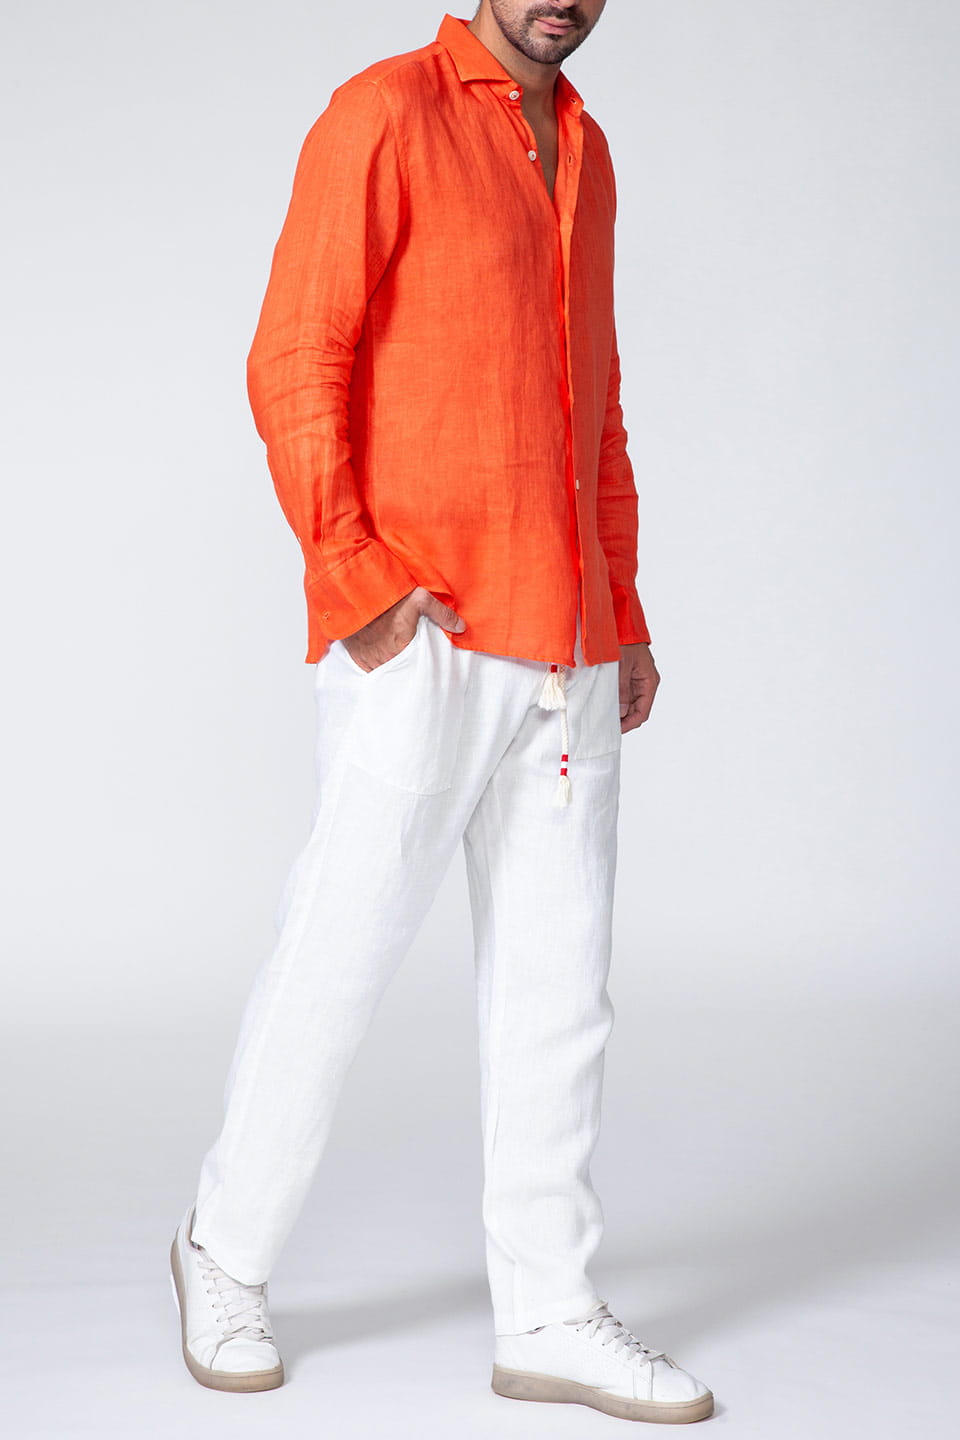 MC saint barth male pamplona shirt orange full front